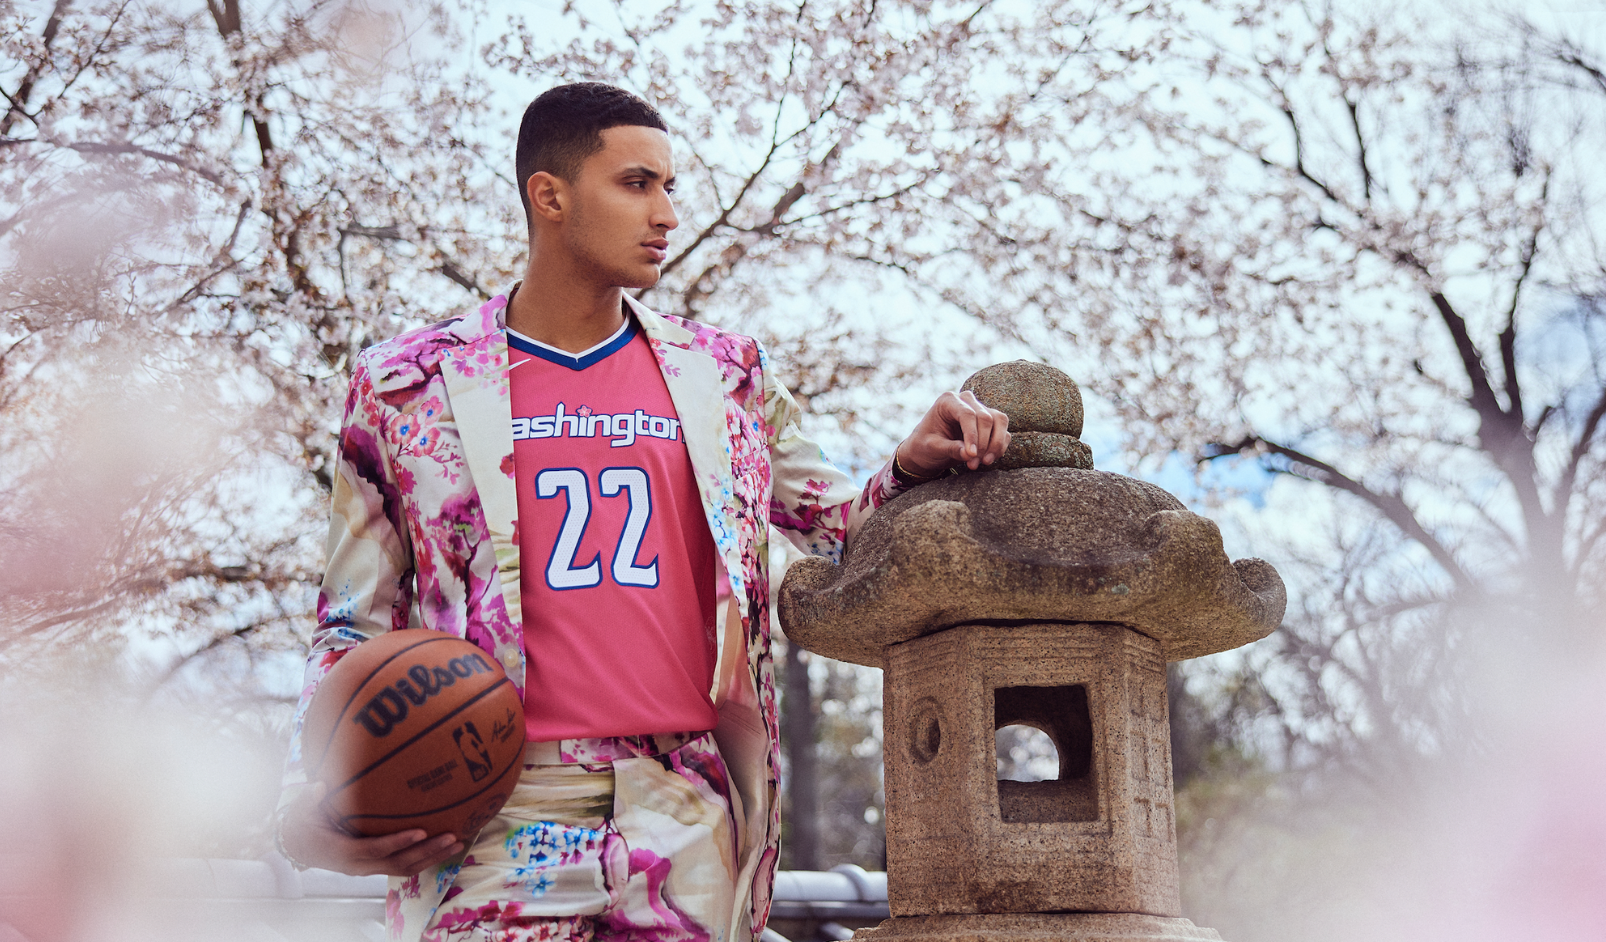 Washington Wizards 22/23 City Edition Uniform: Cherry Blossoms